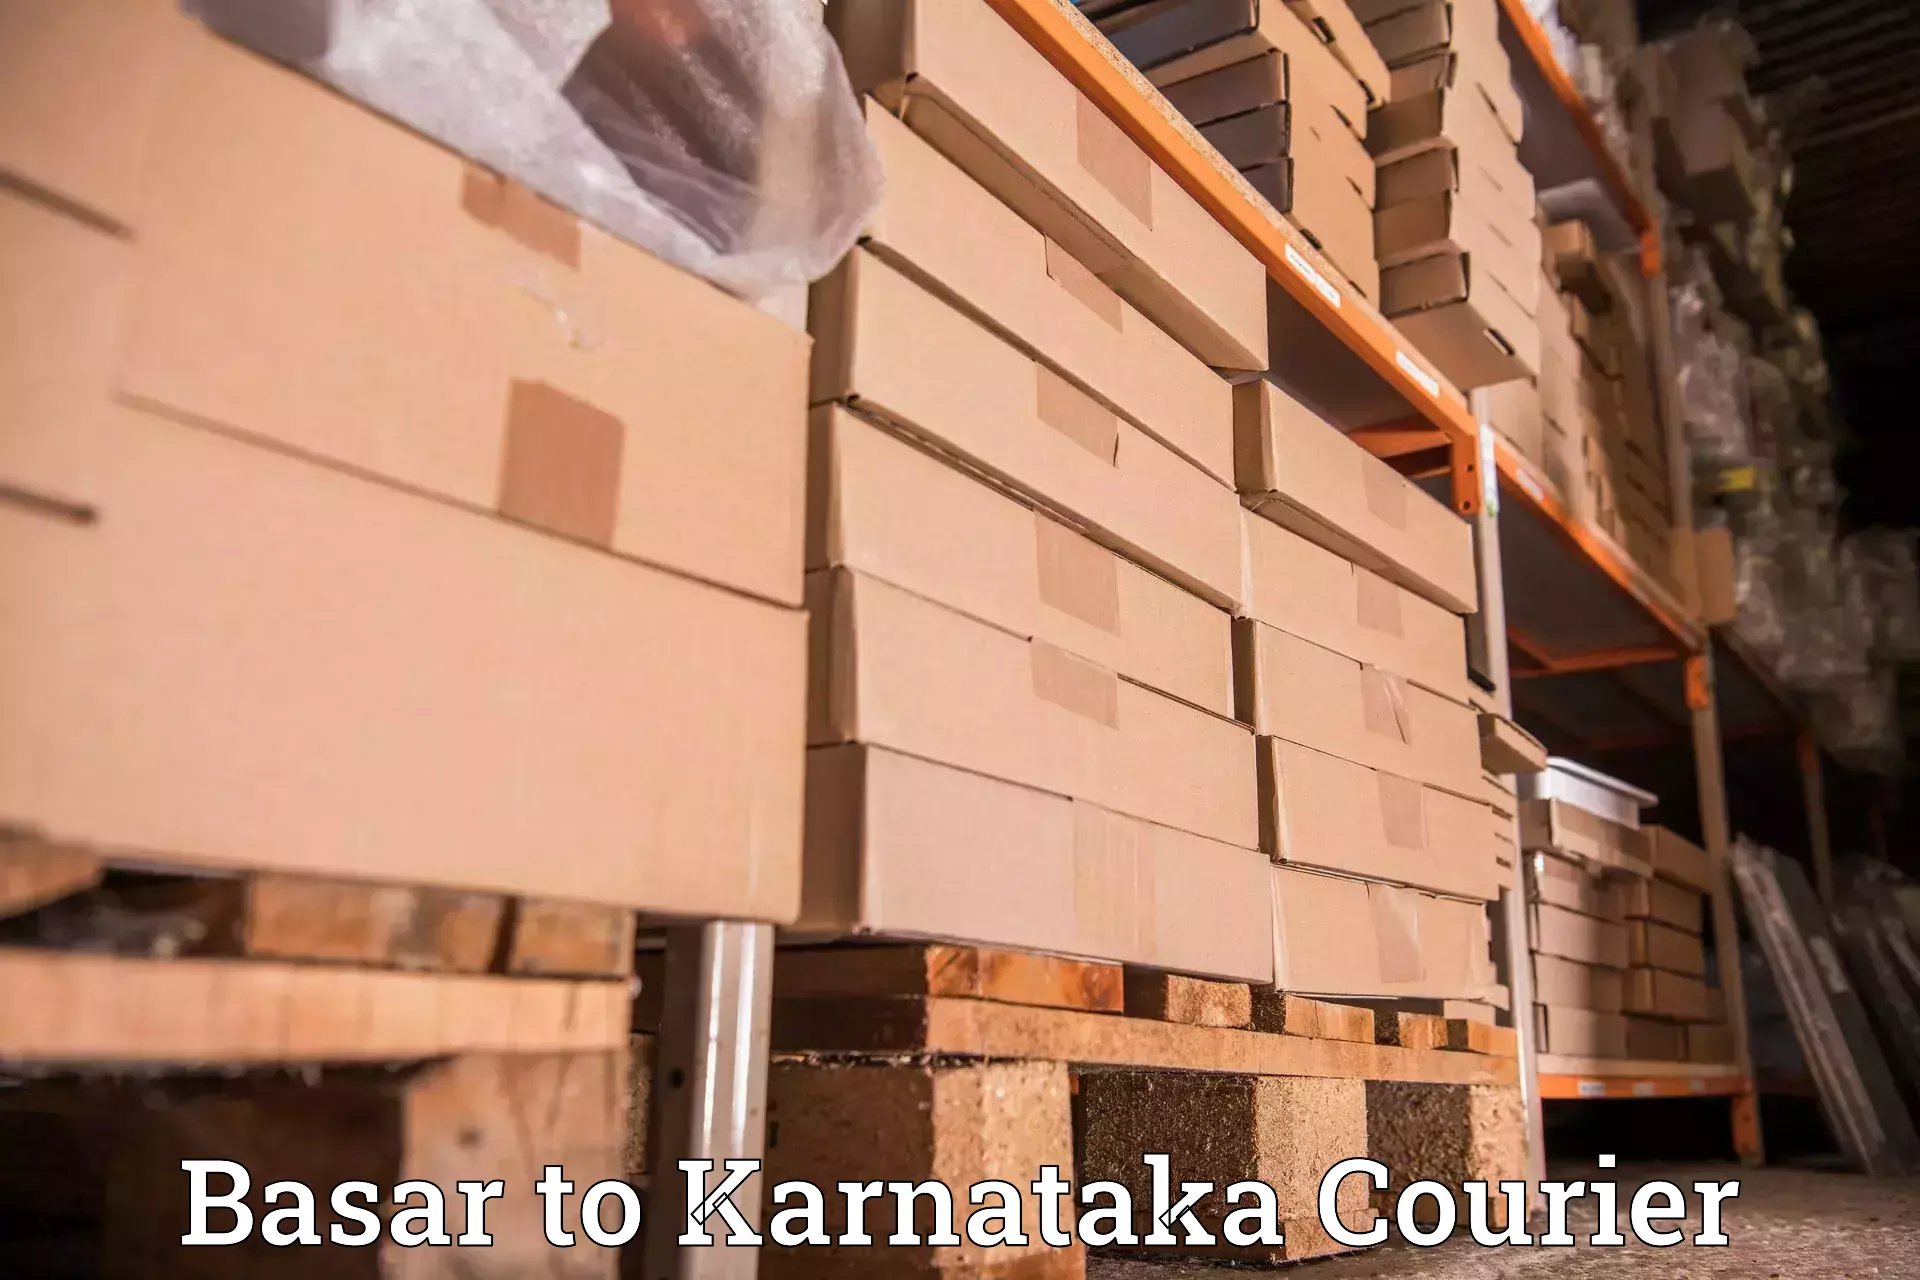 Global courier networks Basar to Karnataka